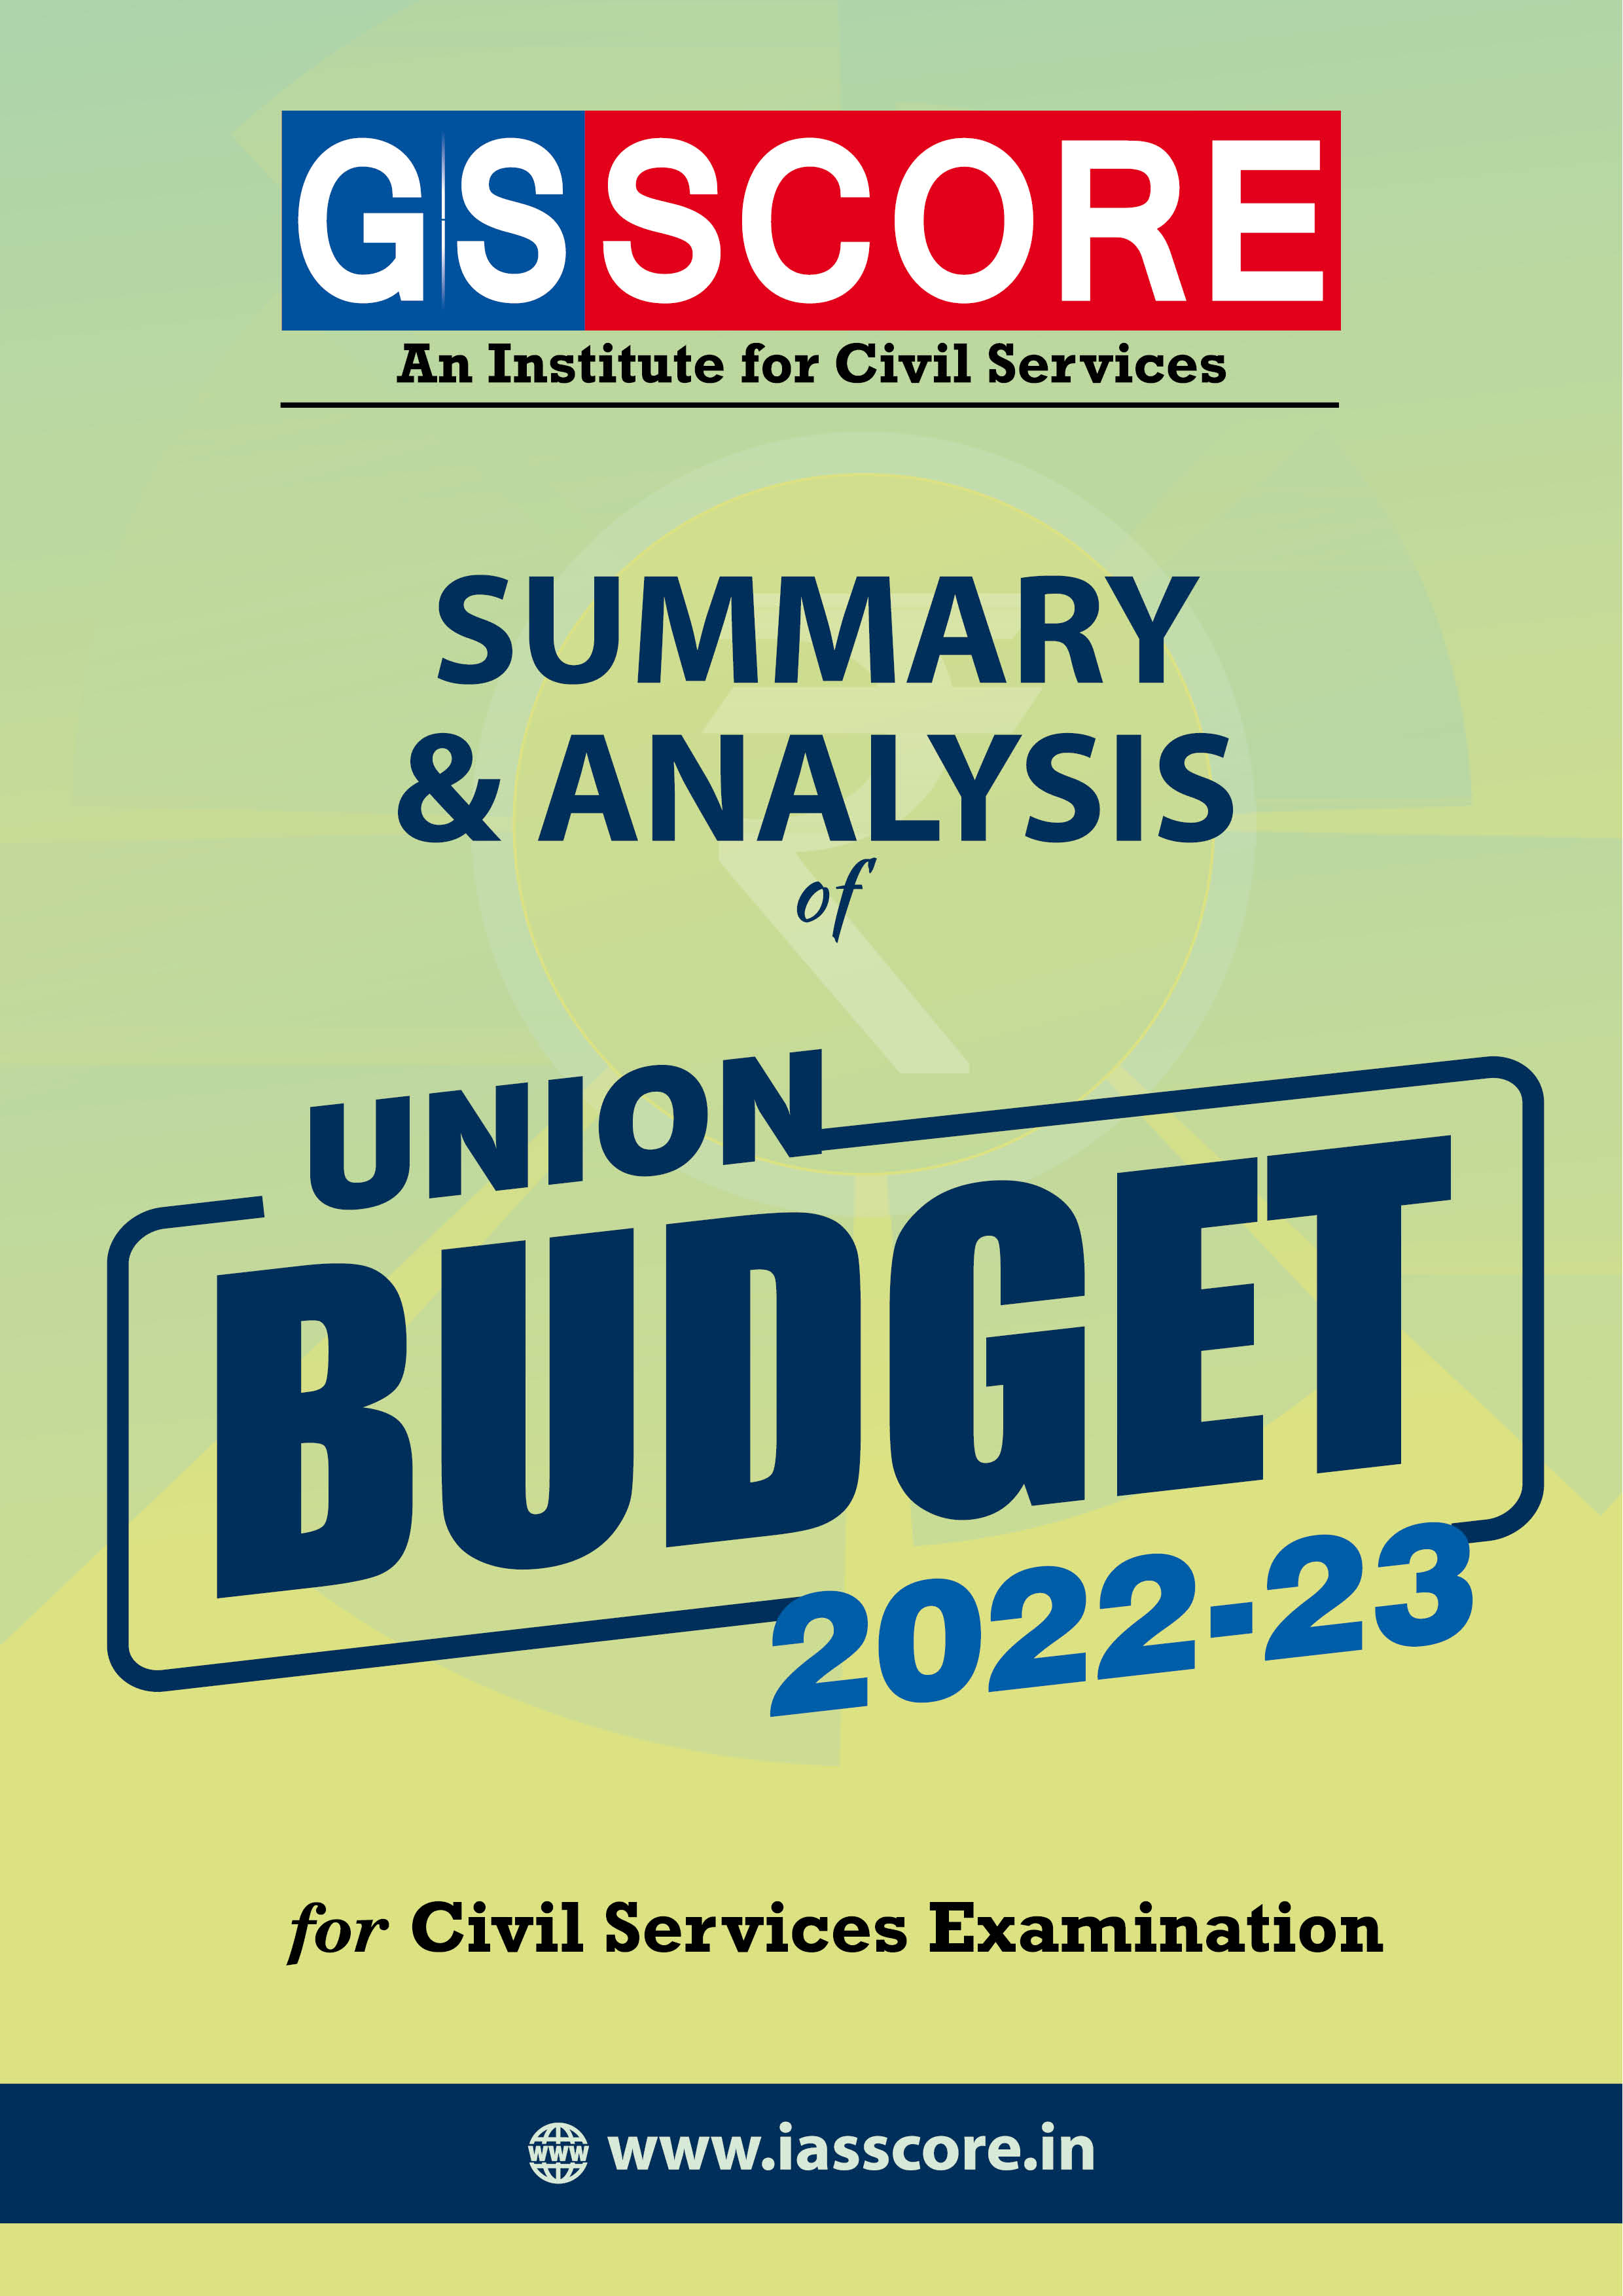 Union Budget 2022-23: Analysis and Highlights